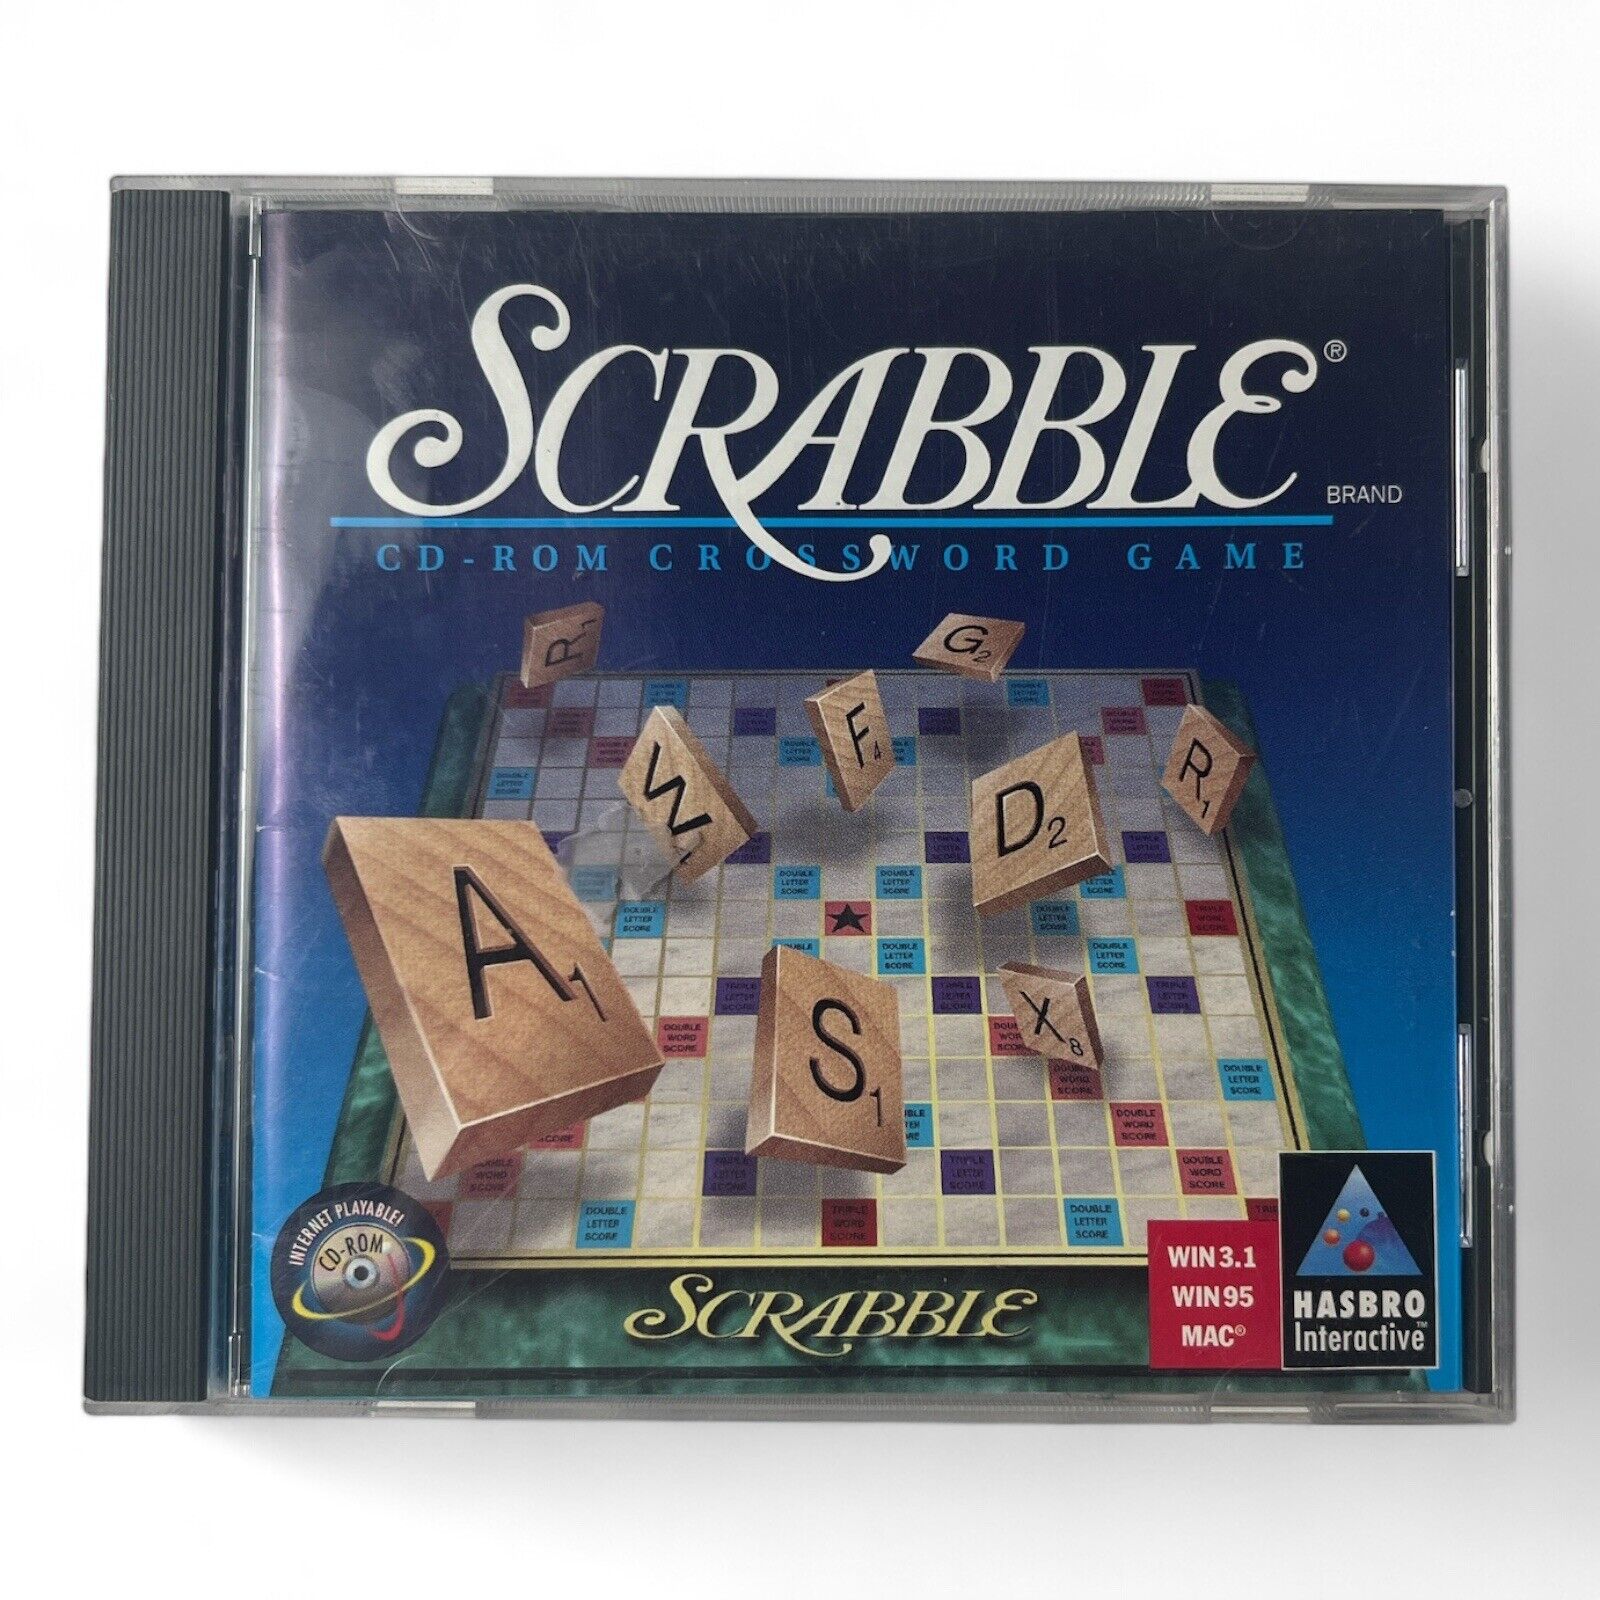 Scrabble Hasbro CD-ROM Crossword Game for Windows 3.1 95 and MAC